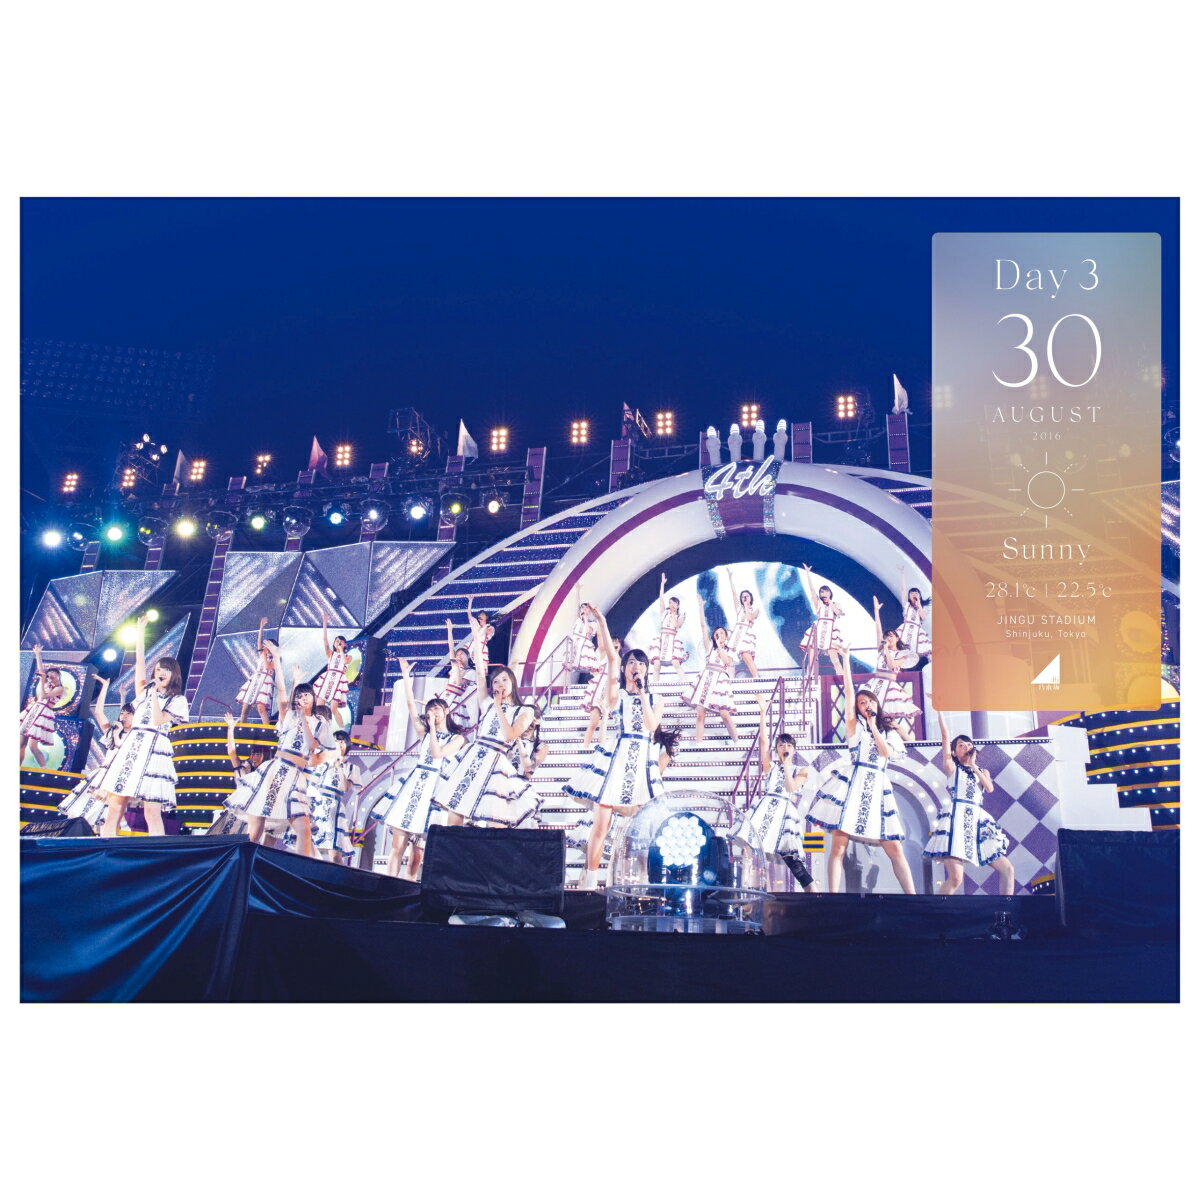 乃木坂46 4th YEAR BIRTHDAY LIVE 2016.8.28-30 JINGU STADIUM Day3【Blu-ray】